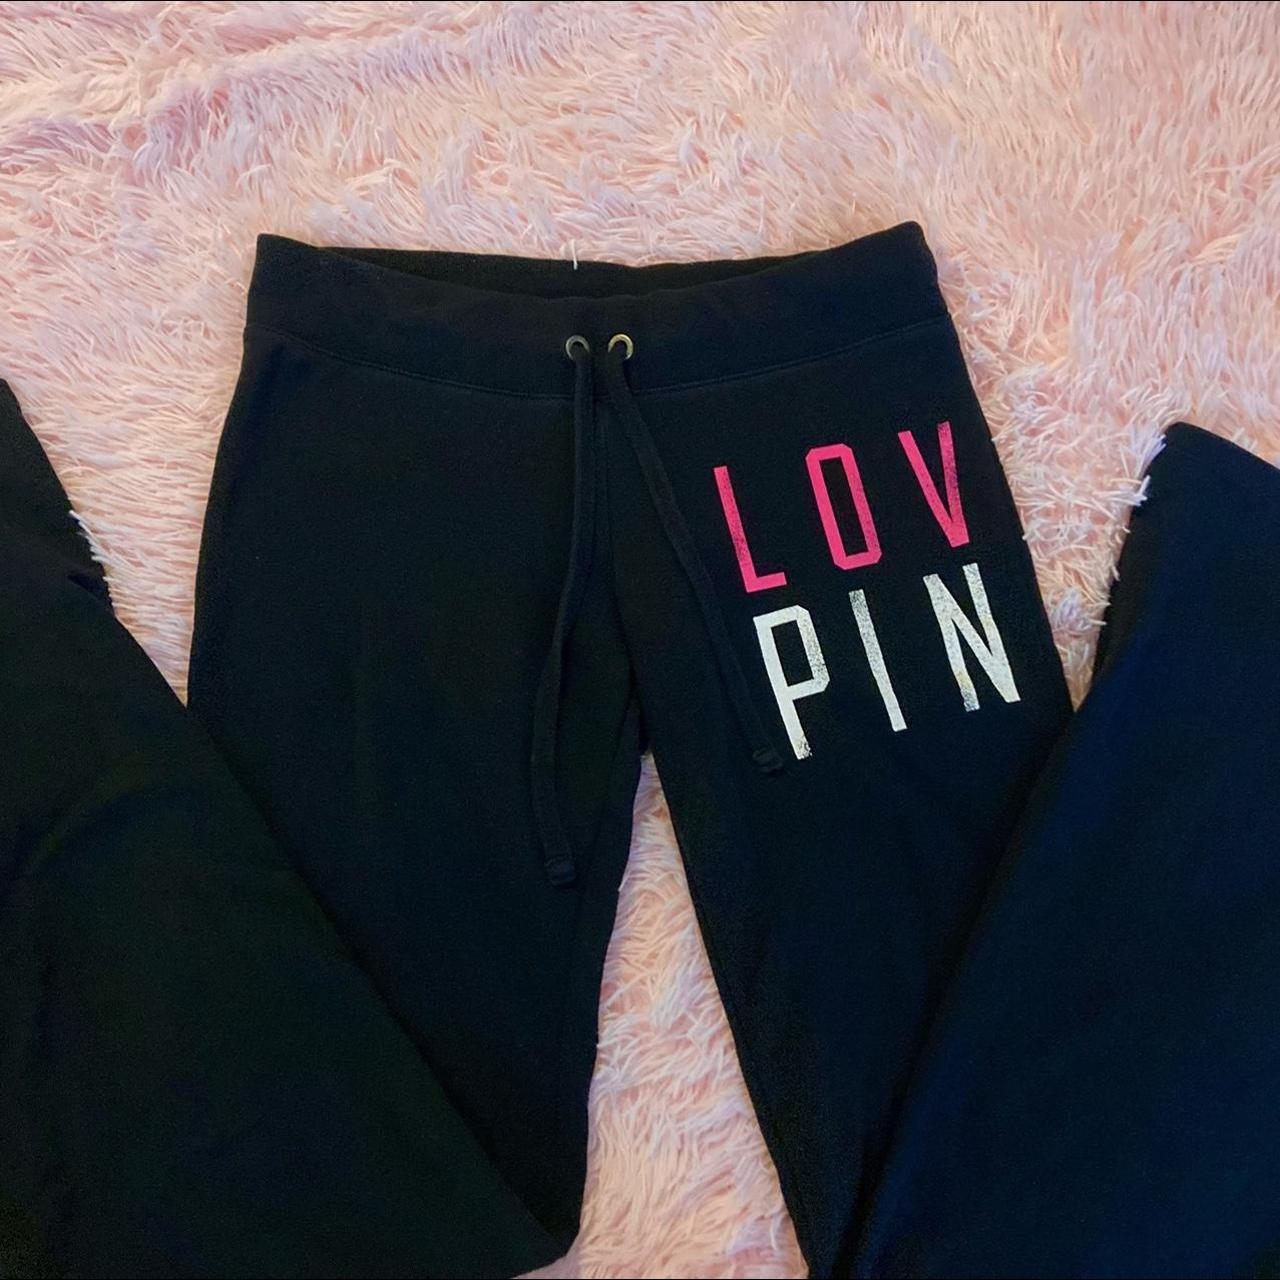 victoria's secret PINK sweatpants size small - Depop